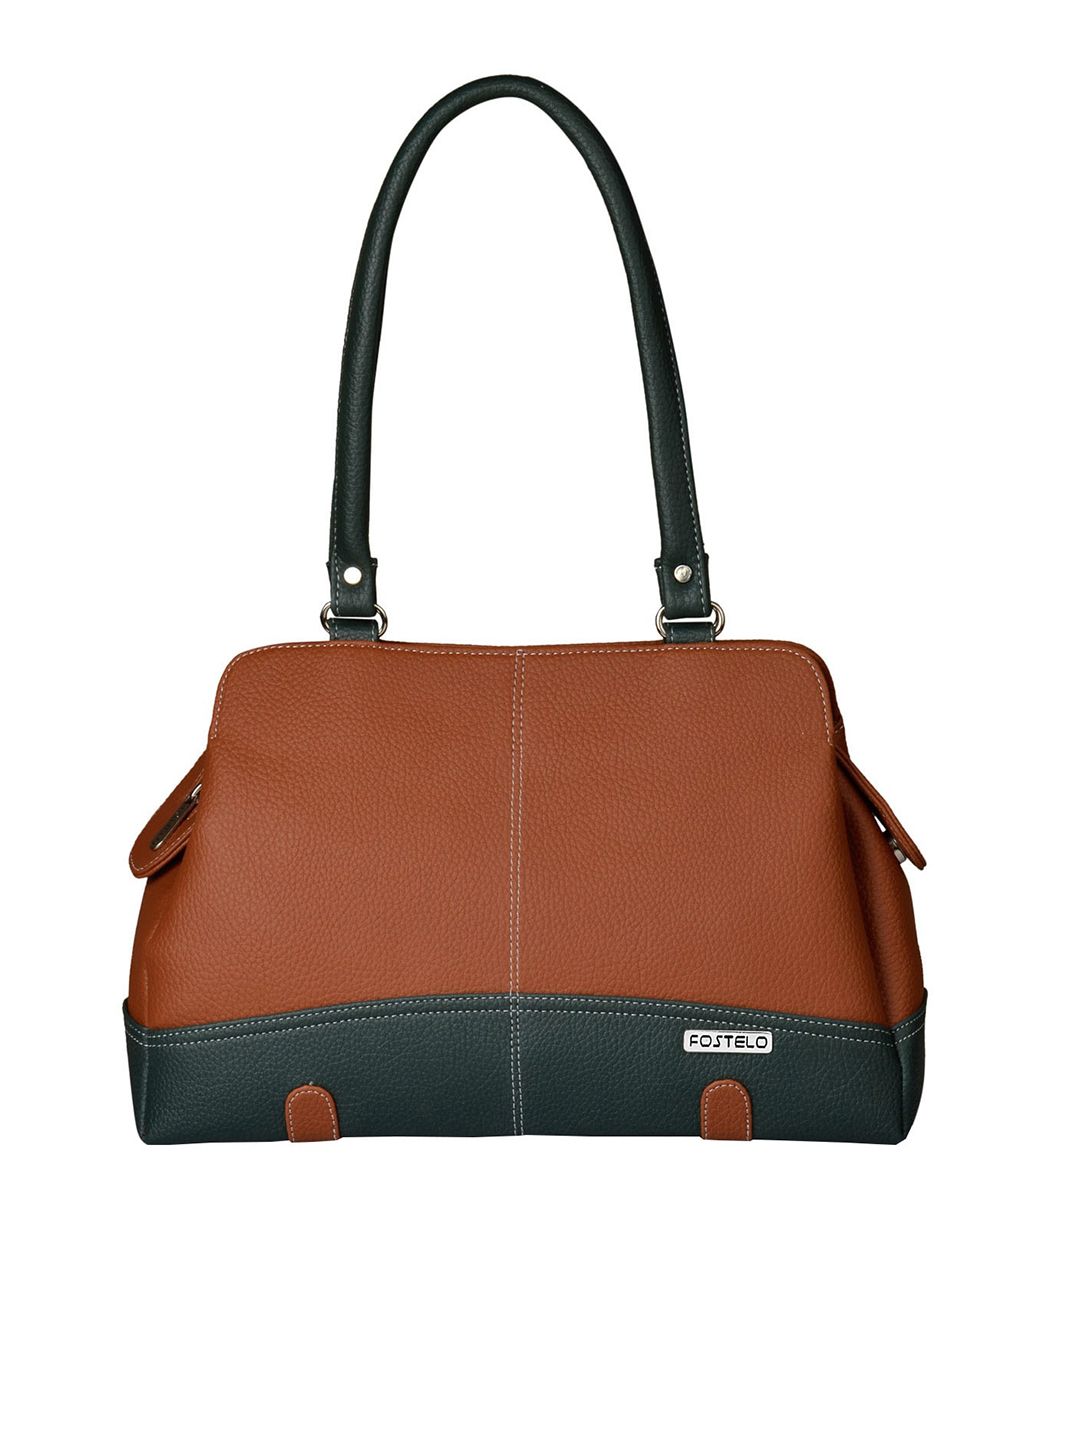 Fostelo Brown & Green Colourblocked Shoulder Bag Price in India